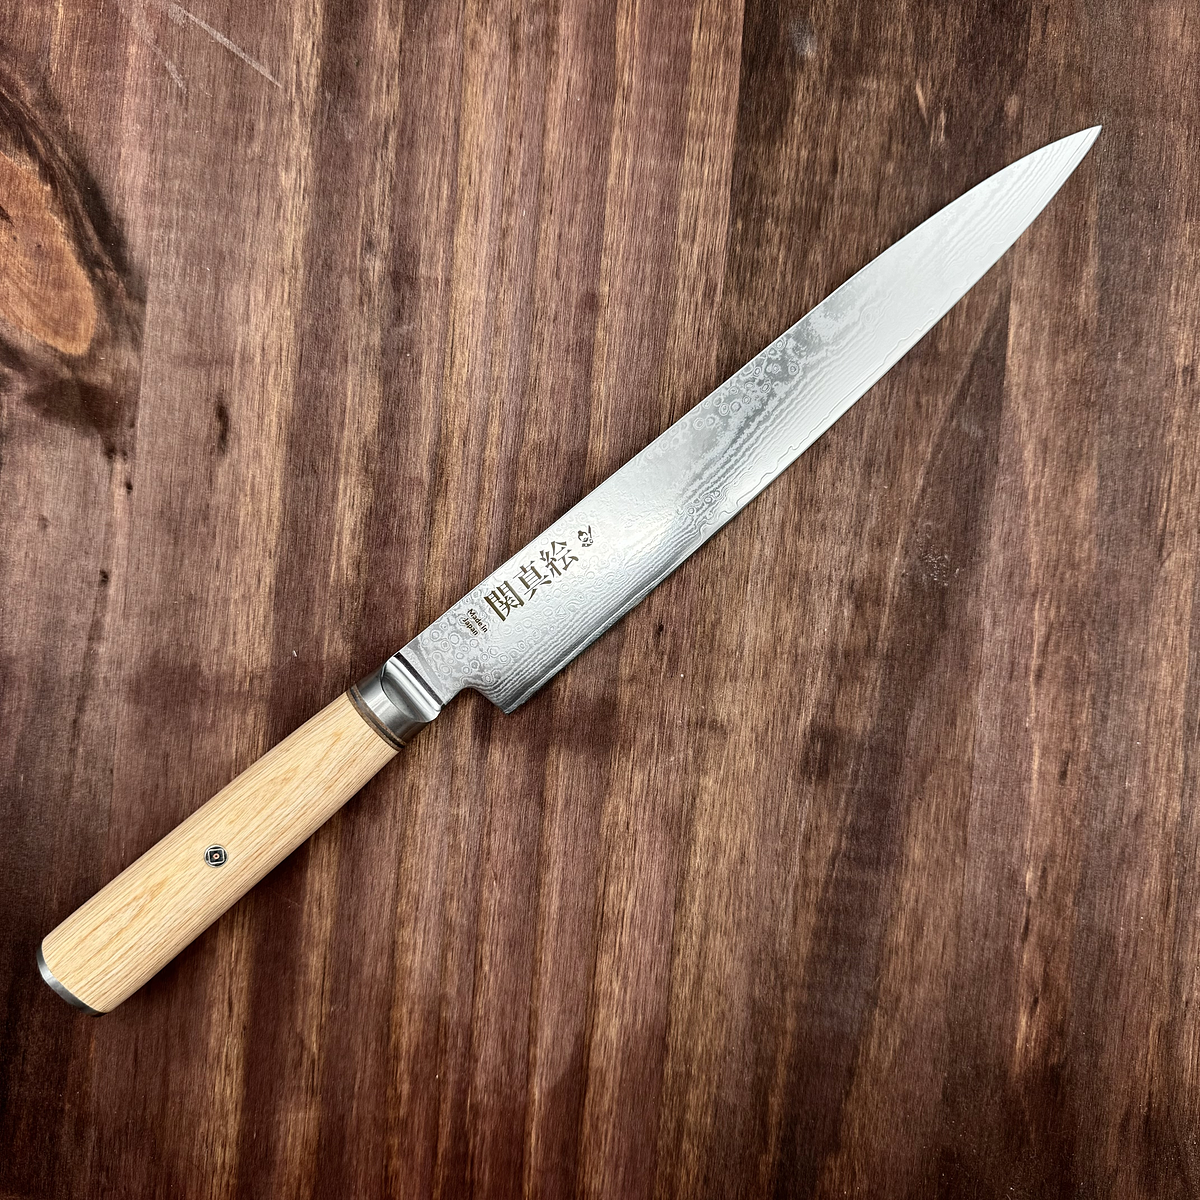 https://cdnx.jumpseller.com/cuchillos-japoneses-cl/image/43344127/resize/1200/1200?1702218819